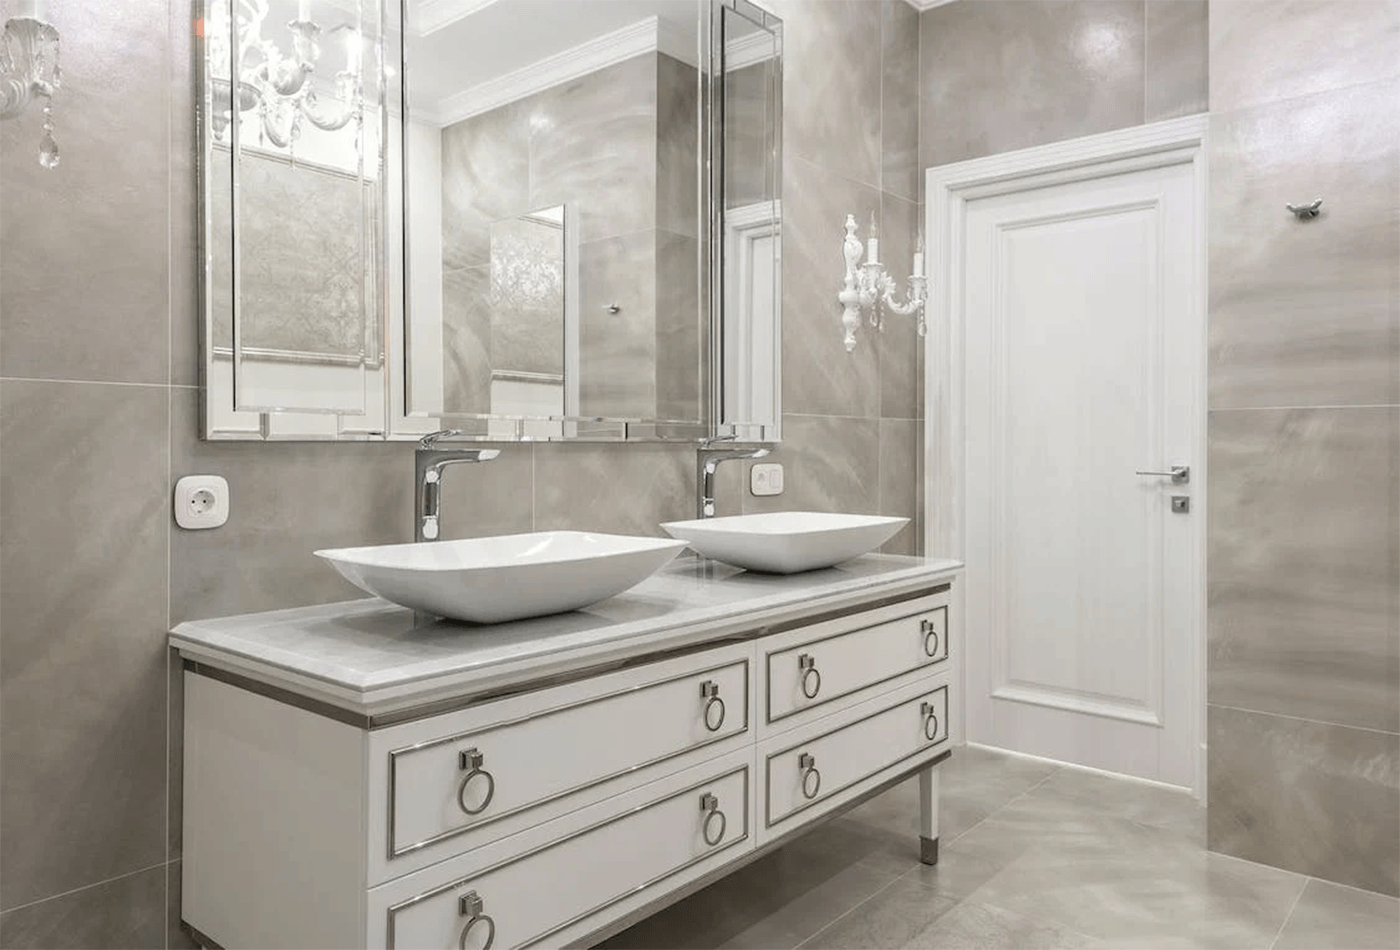 Bathroom Mirror Ideas: Reflecting Style & Function